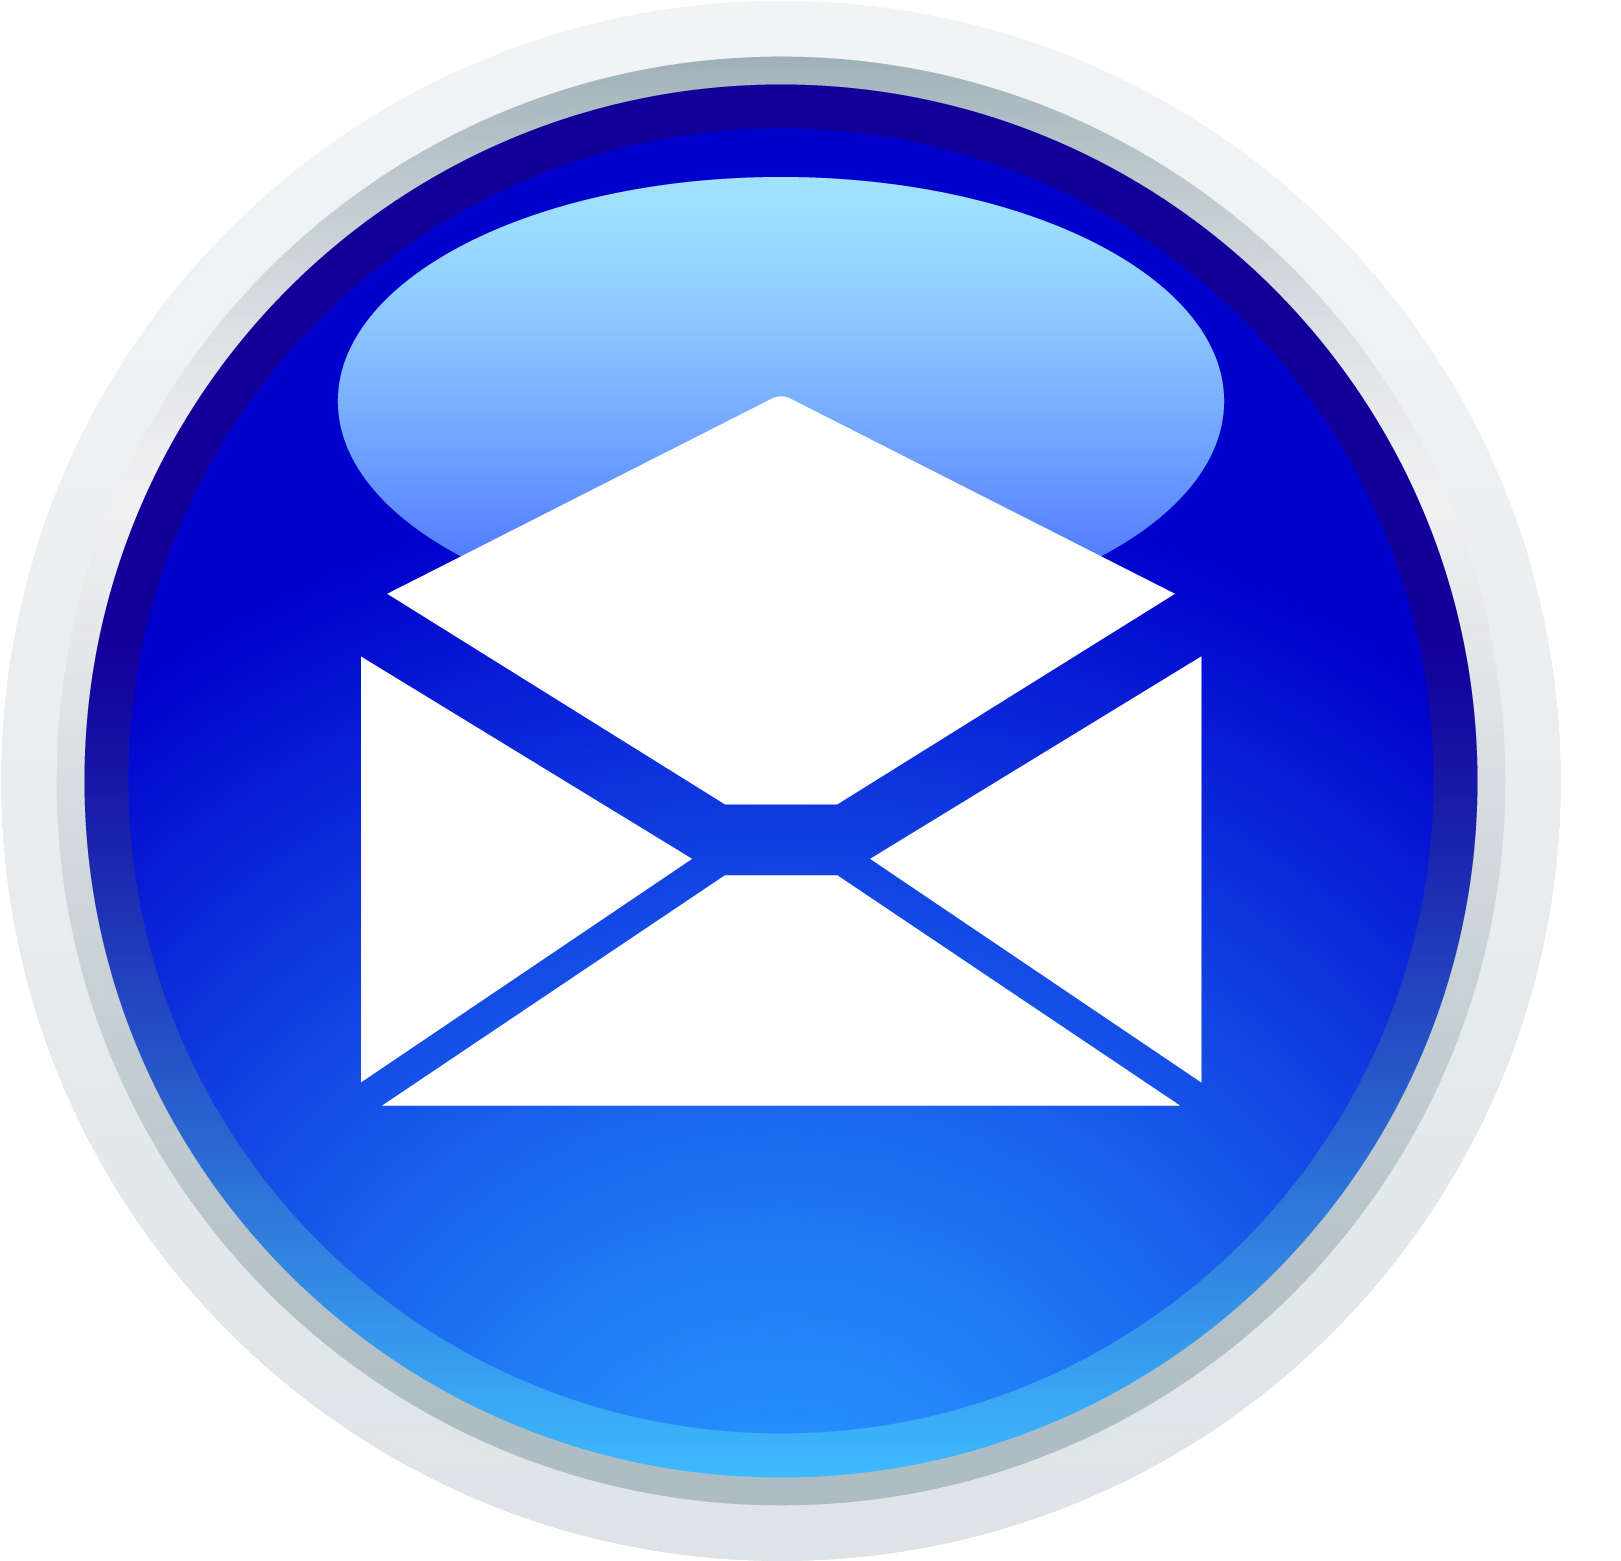 Download PNG image - Email Symbol PNG Image 